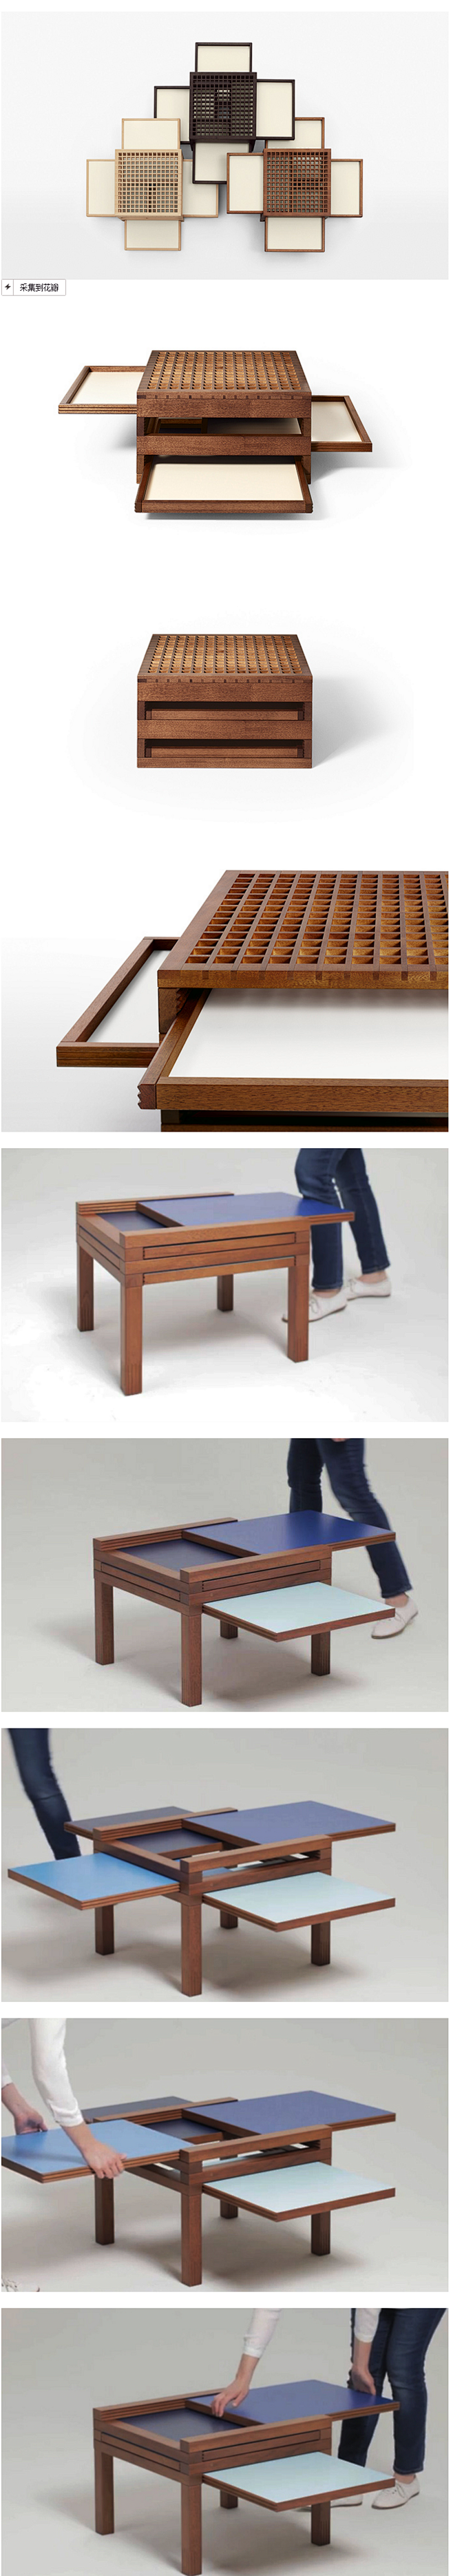 Tetra Table:节省空间的咖啡桌...